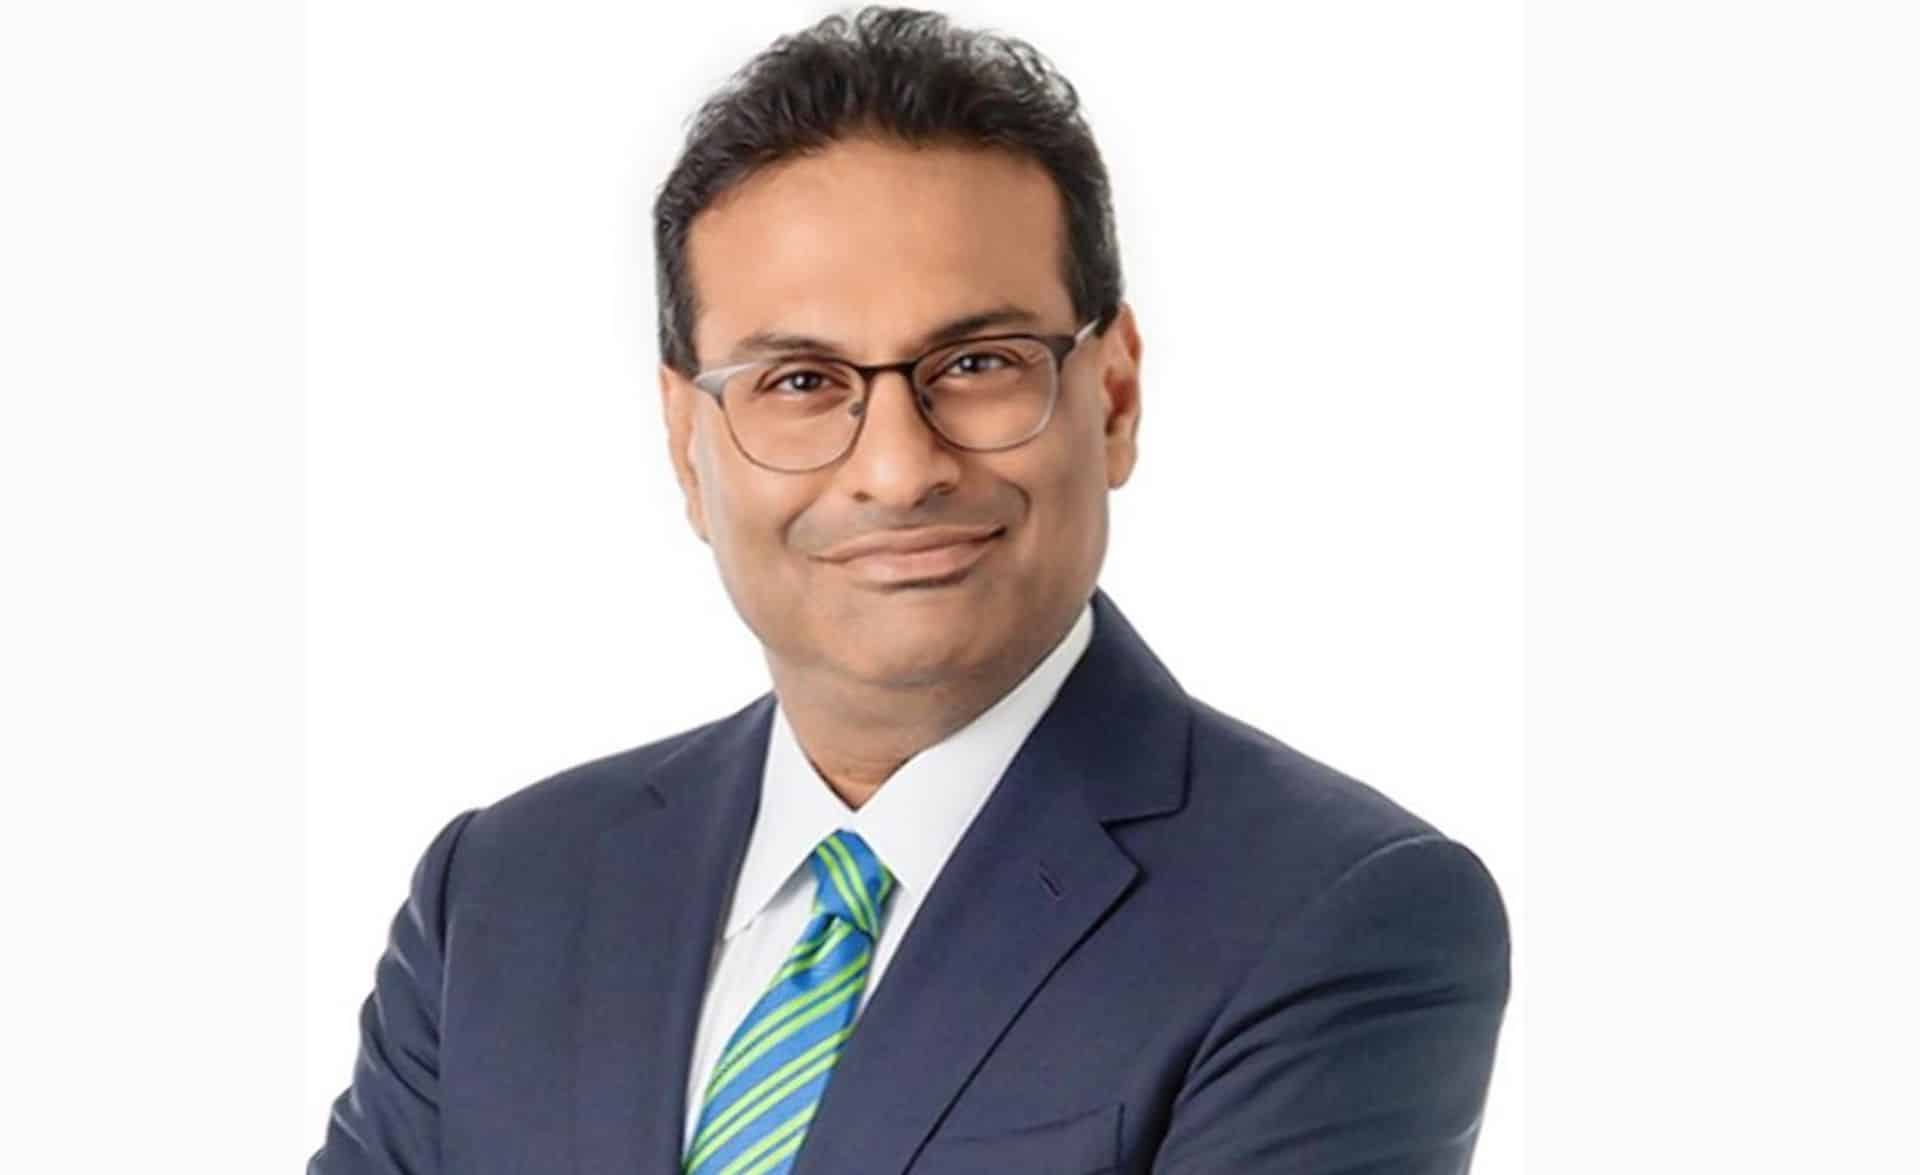 Starbucks names Laxman Narasimhan as its next CEO